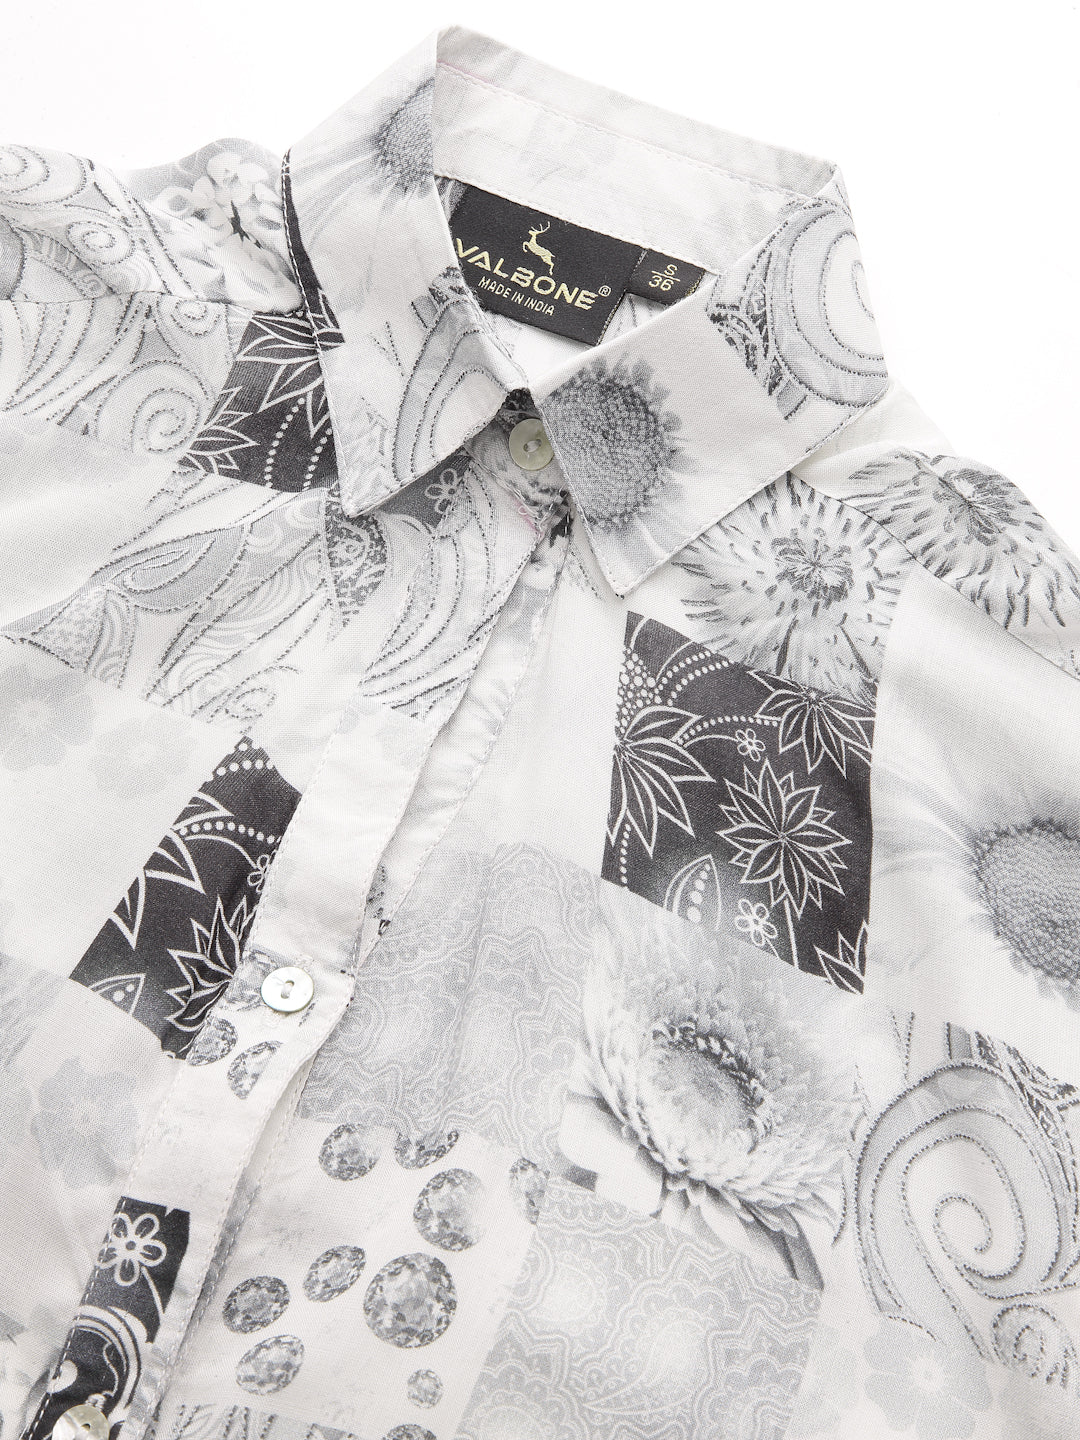 Valbone Women’s White & Black Rayon Modal Silk Floral Printed Shirt